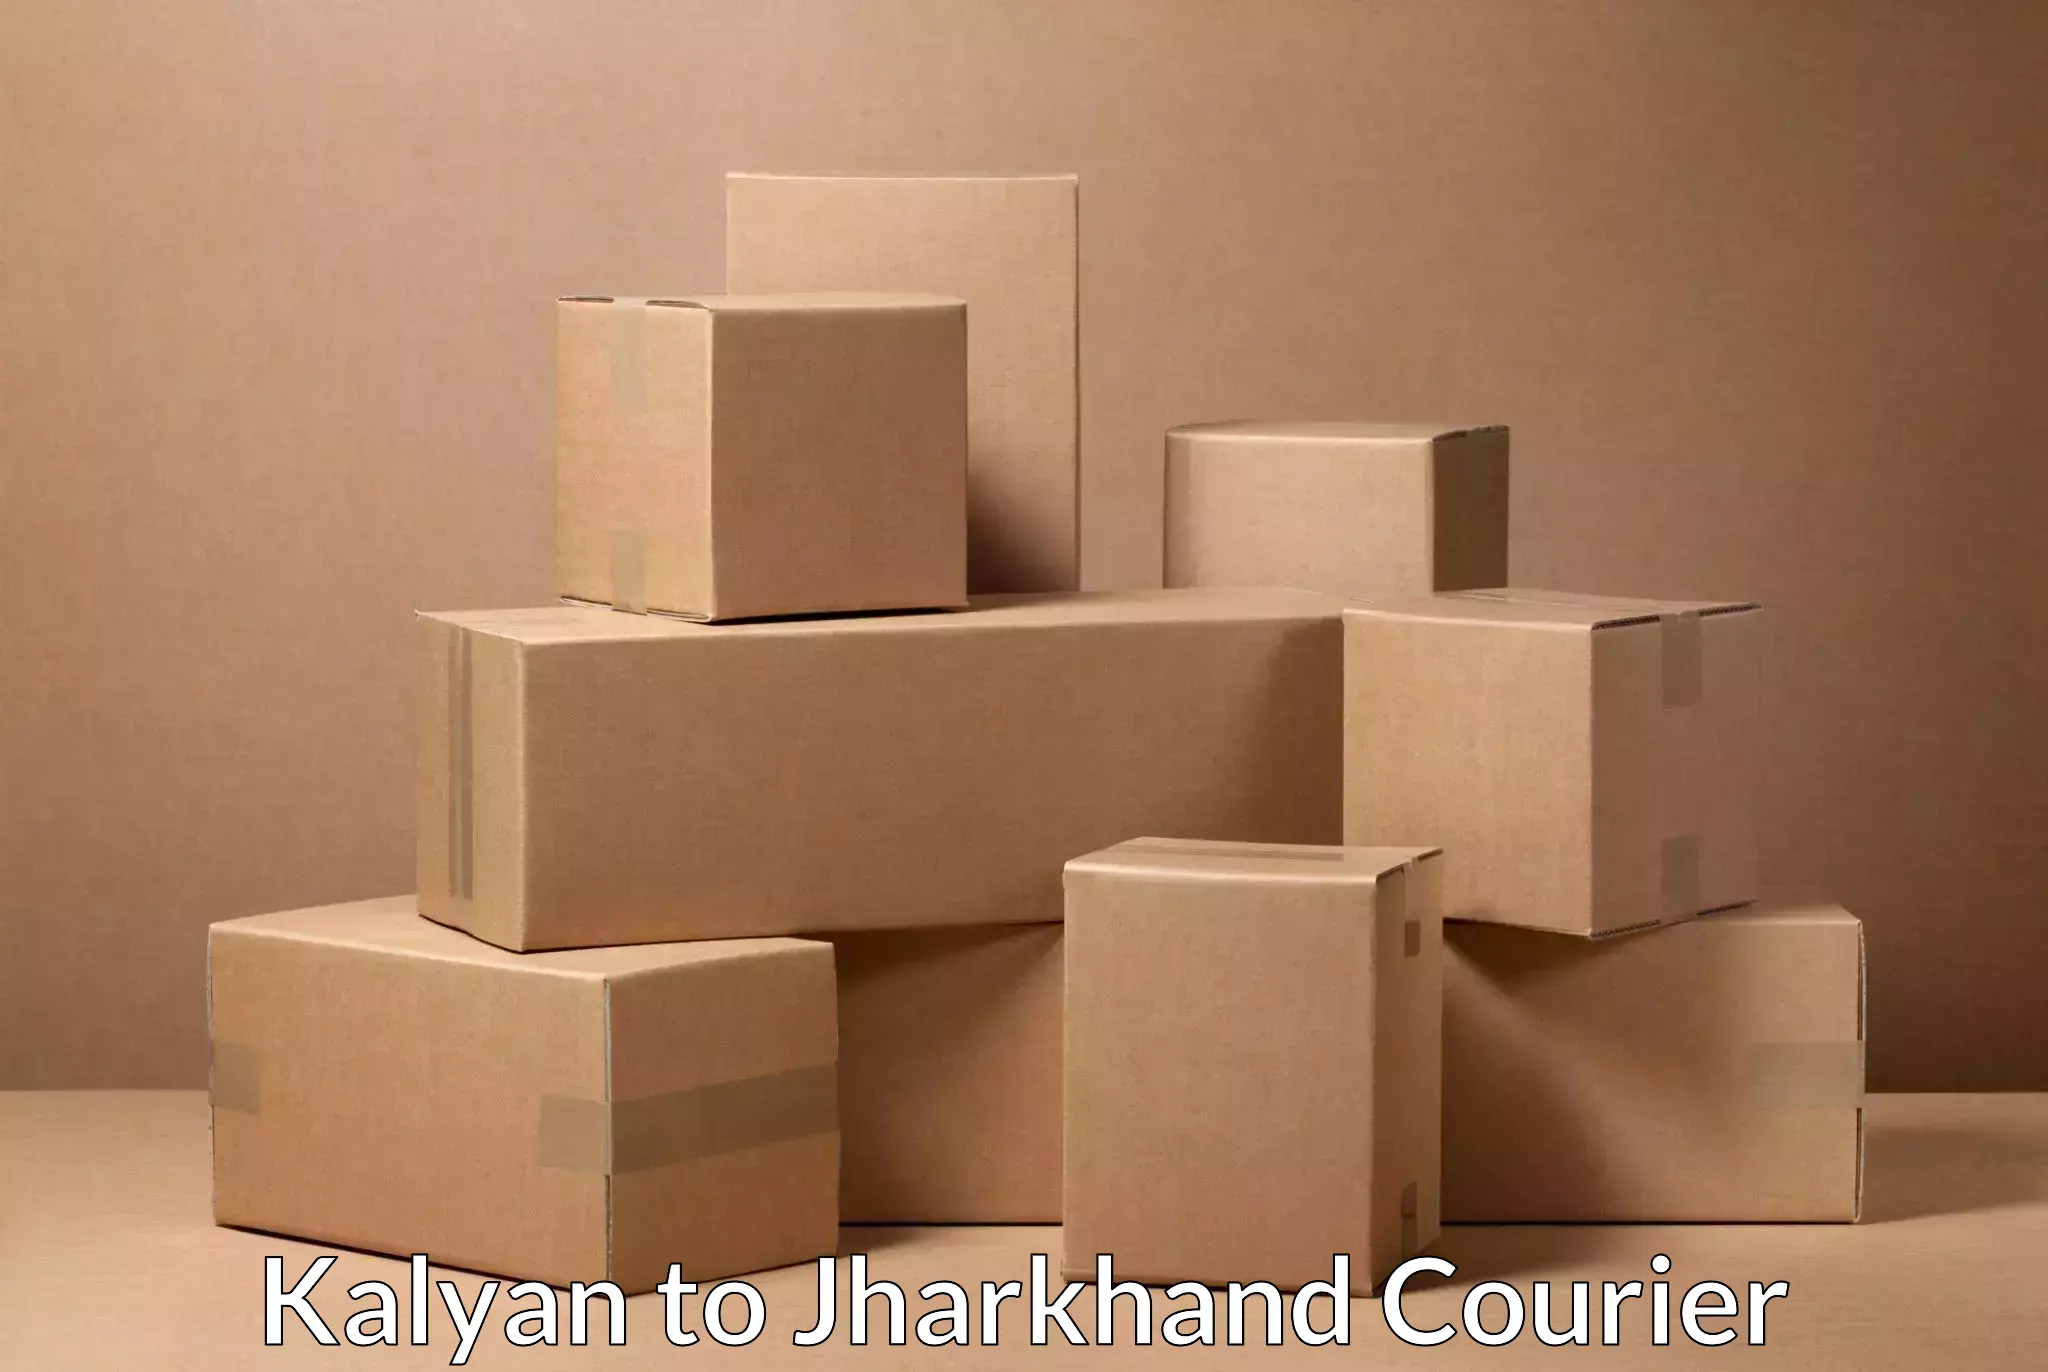 Nationwide parcel services Kalyan to Ranchi